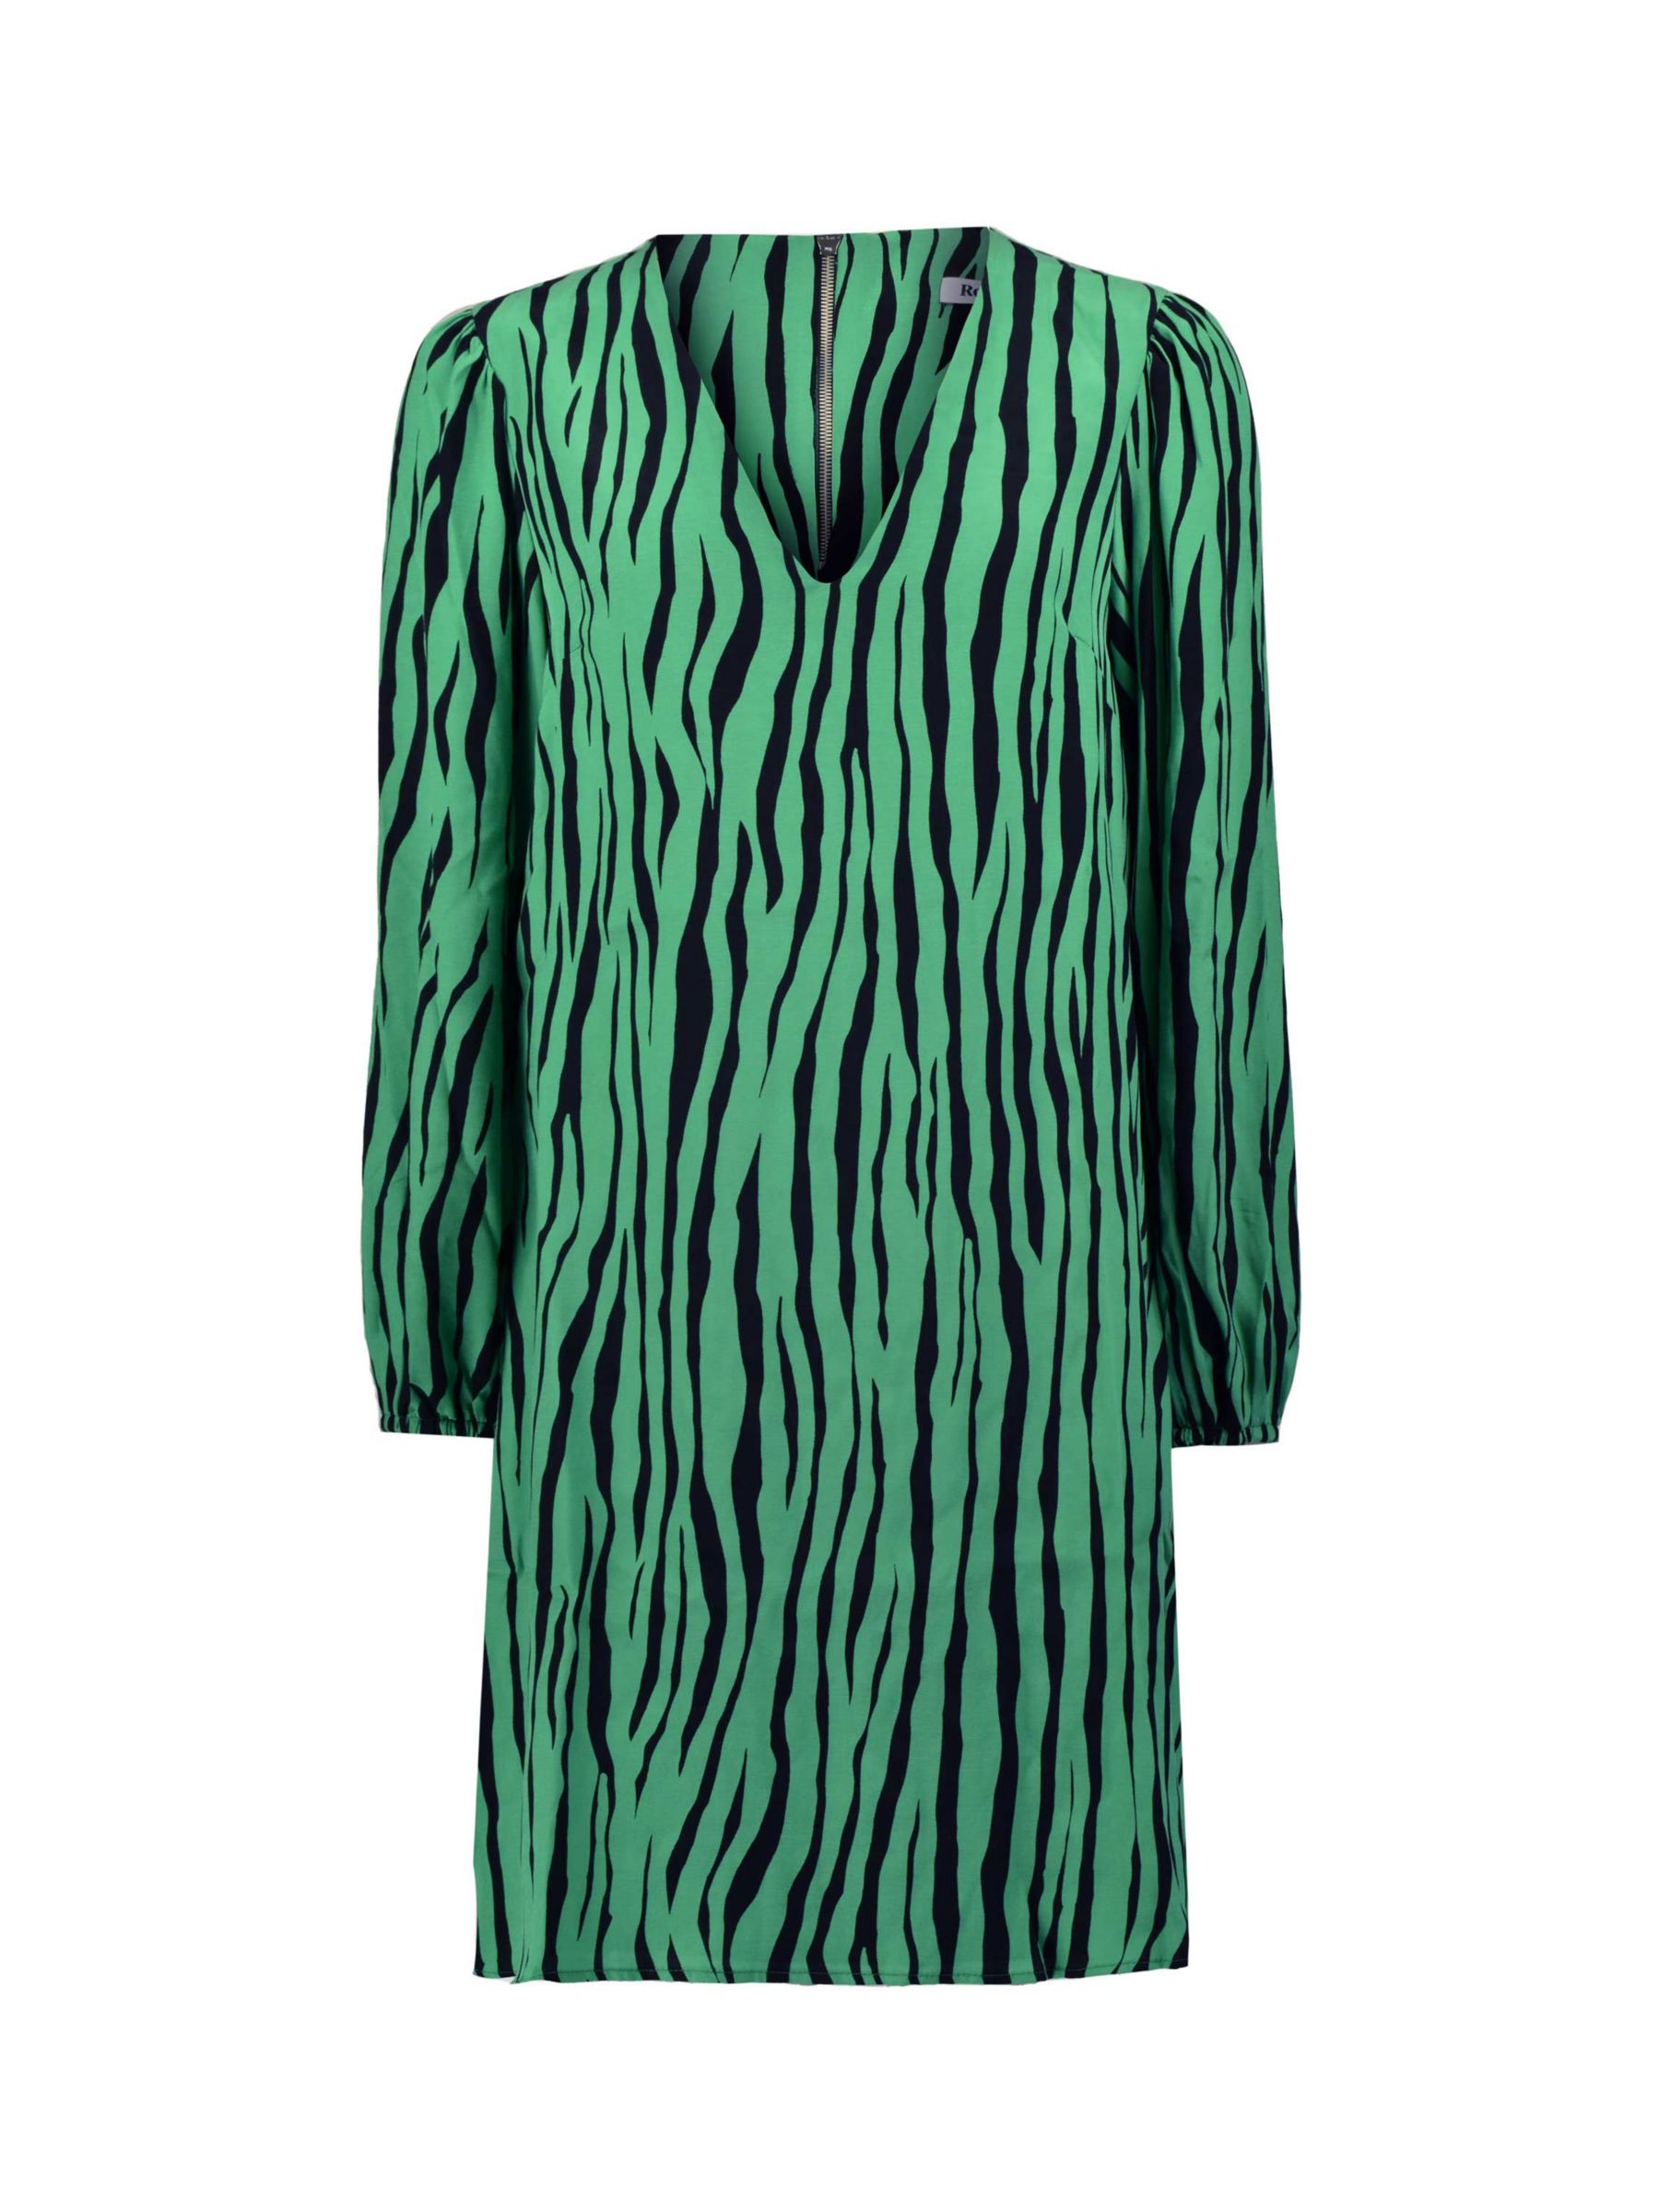 Buy Ro&Zo Long Sleeve Zebra Print Tunic Dress, Green/Black Online at johnlewis.com